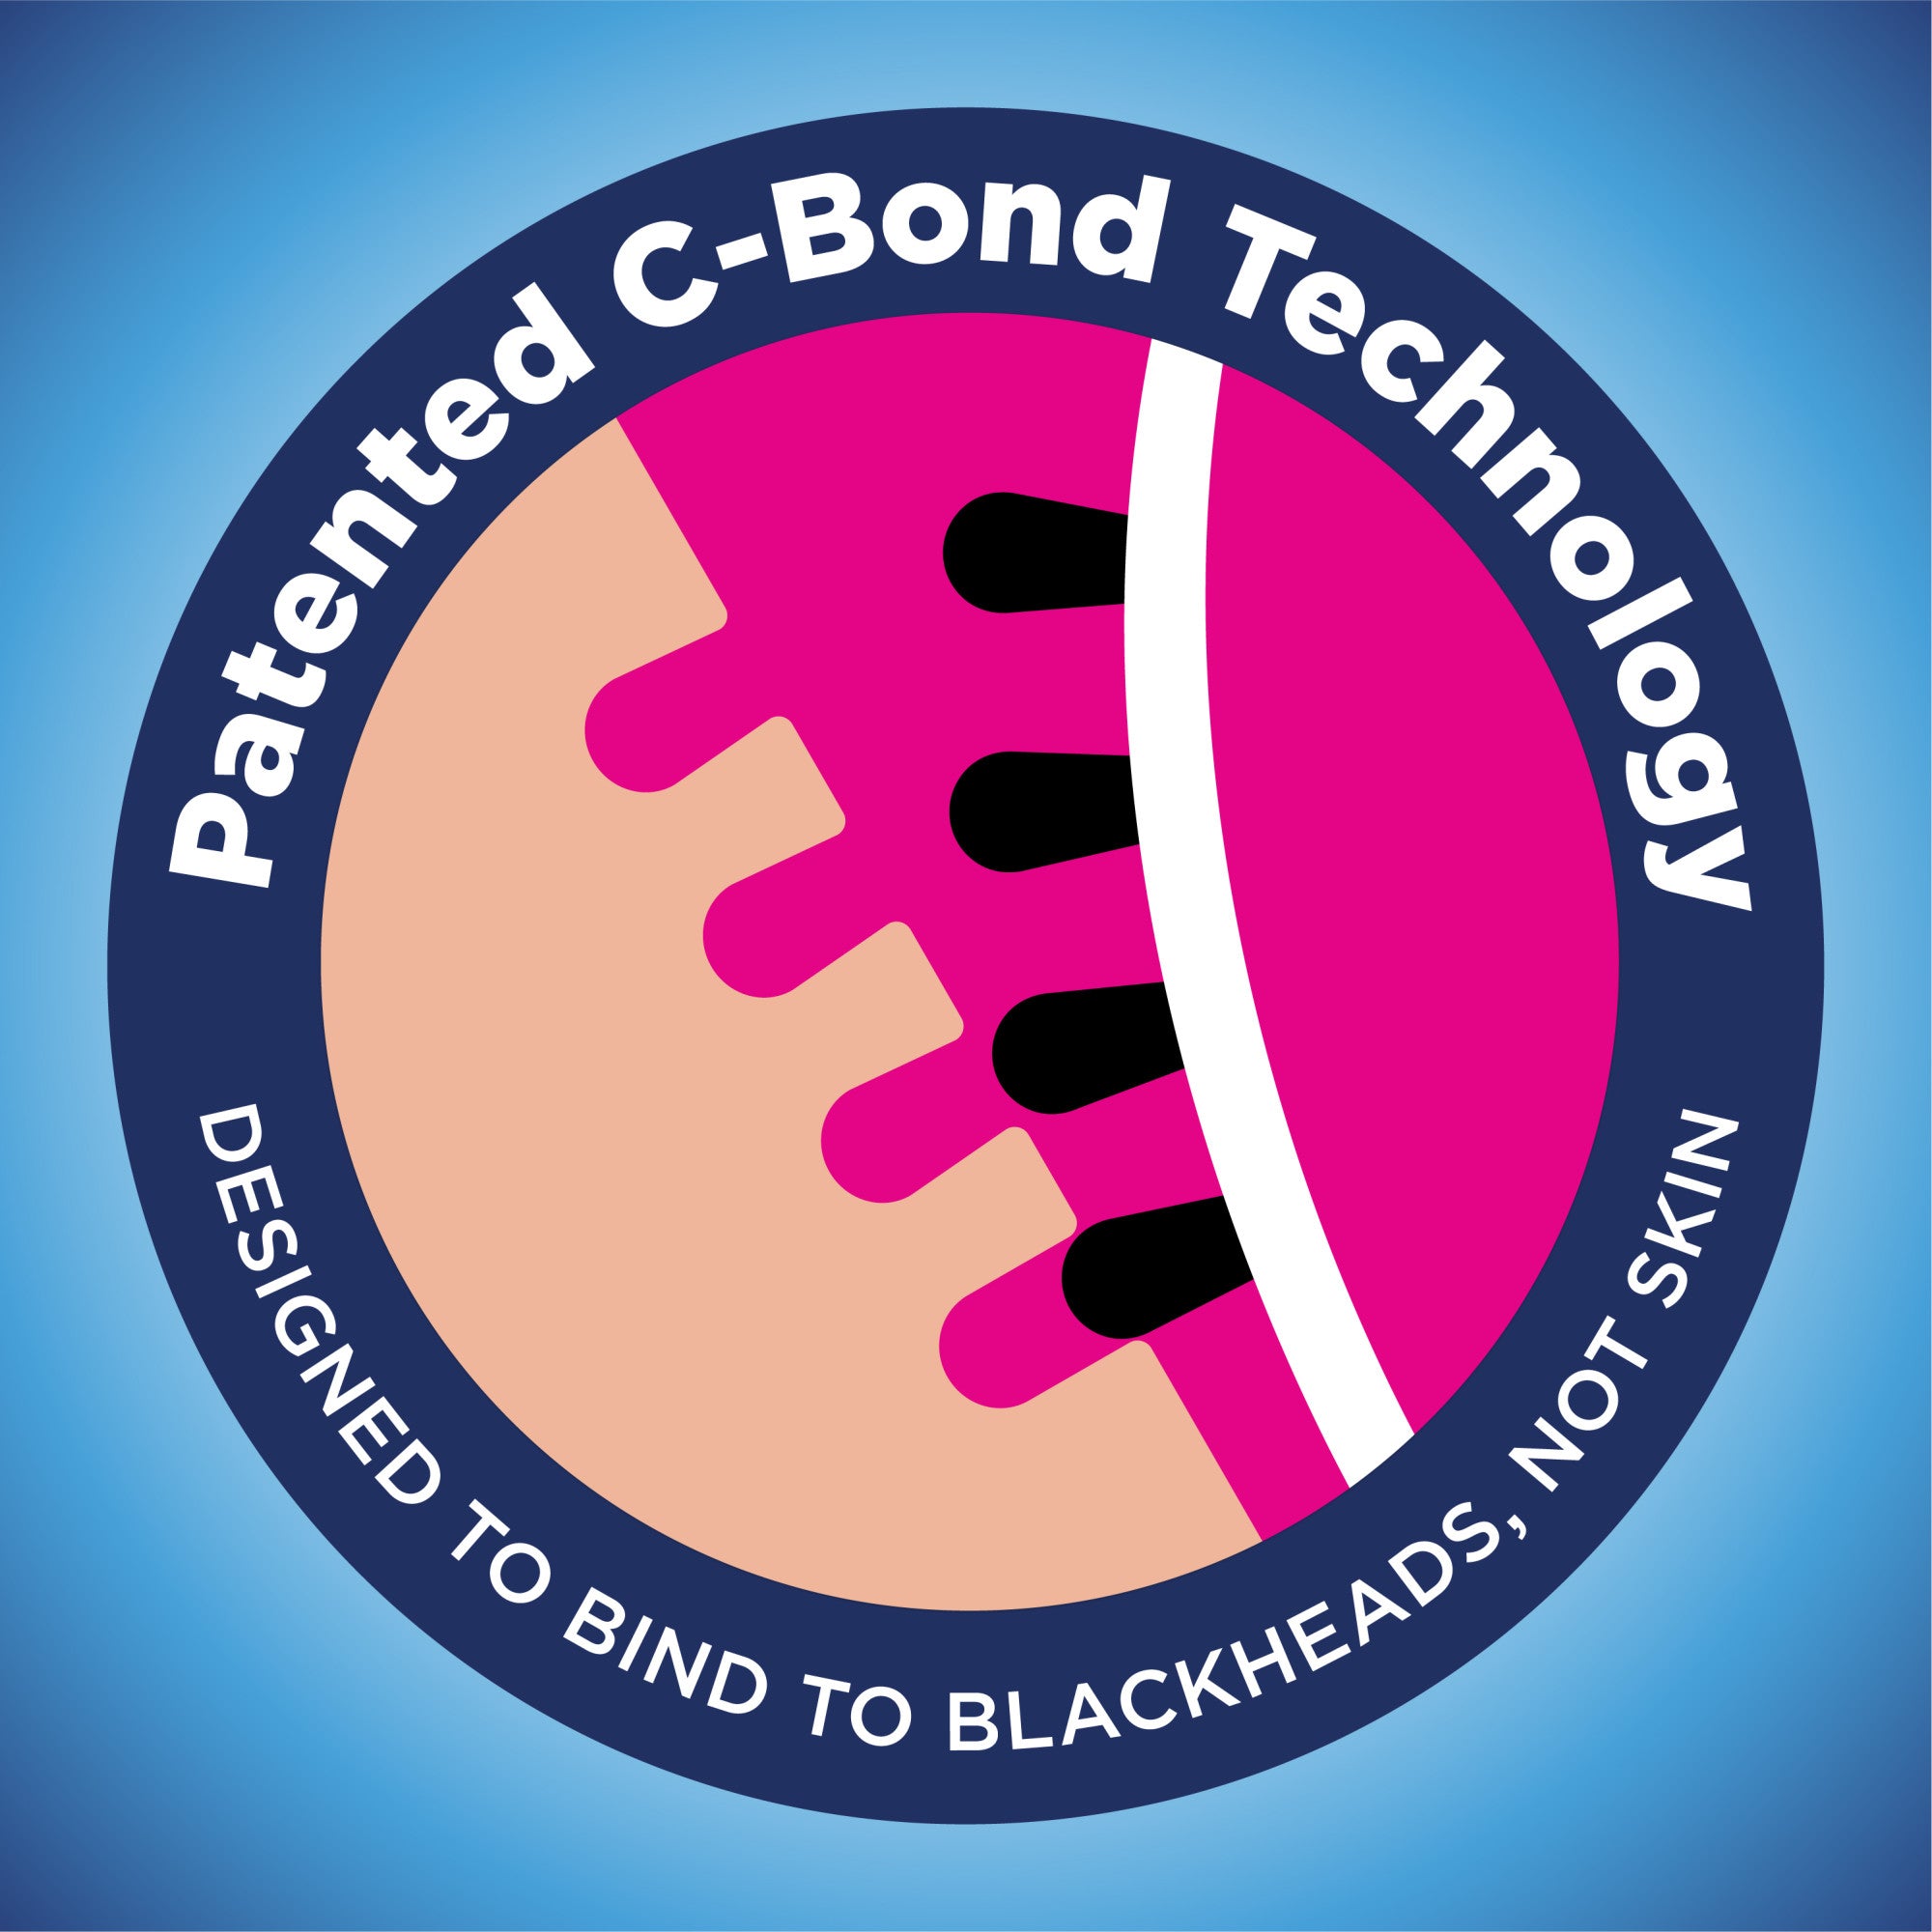 Patented C-Bond Technology. Designed to bine to blackheads, not skin.